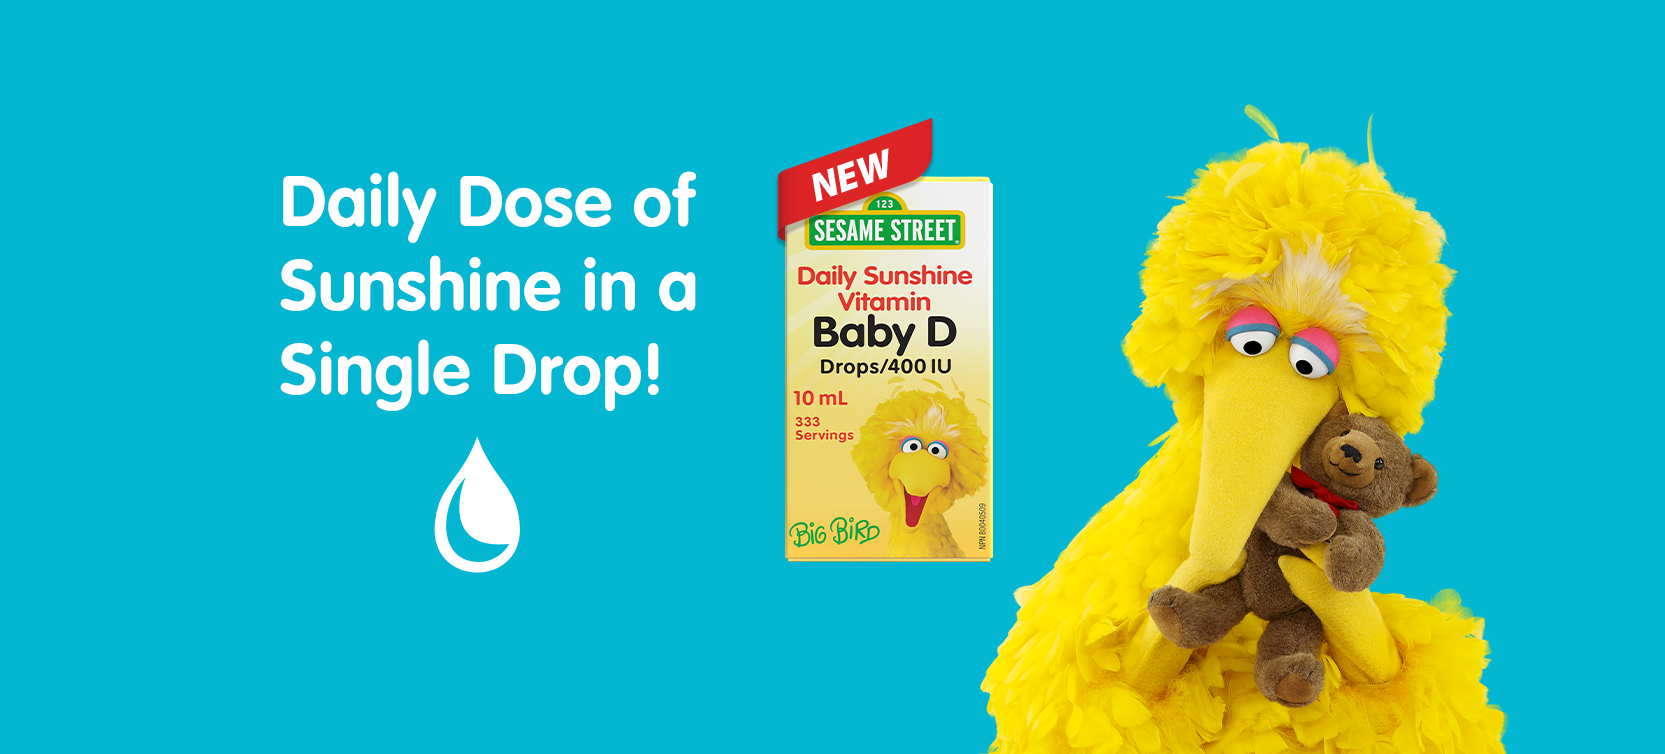 Sesame Street Big Bird with Vitamin D Sunshine